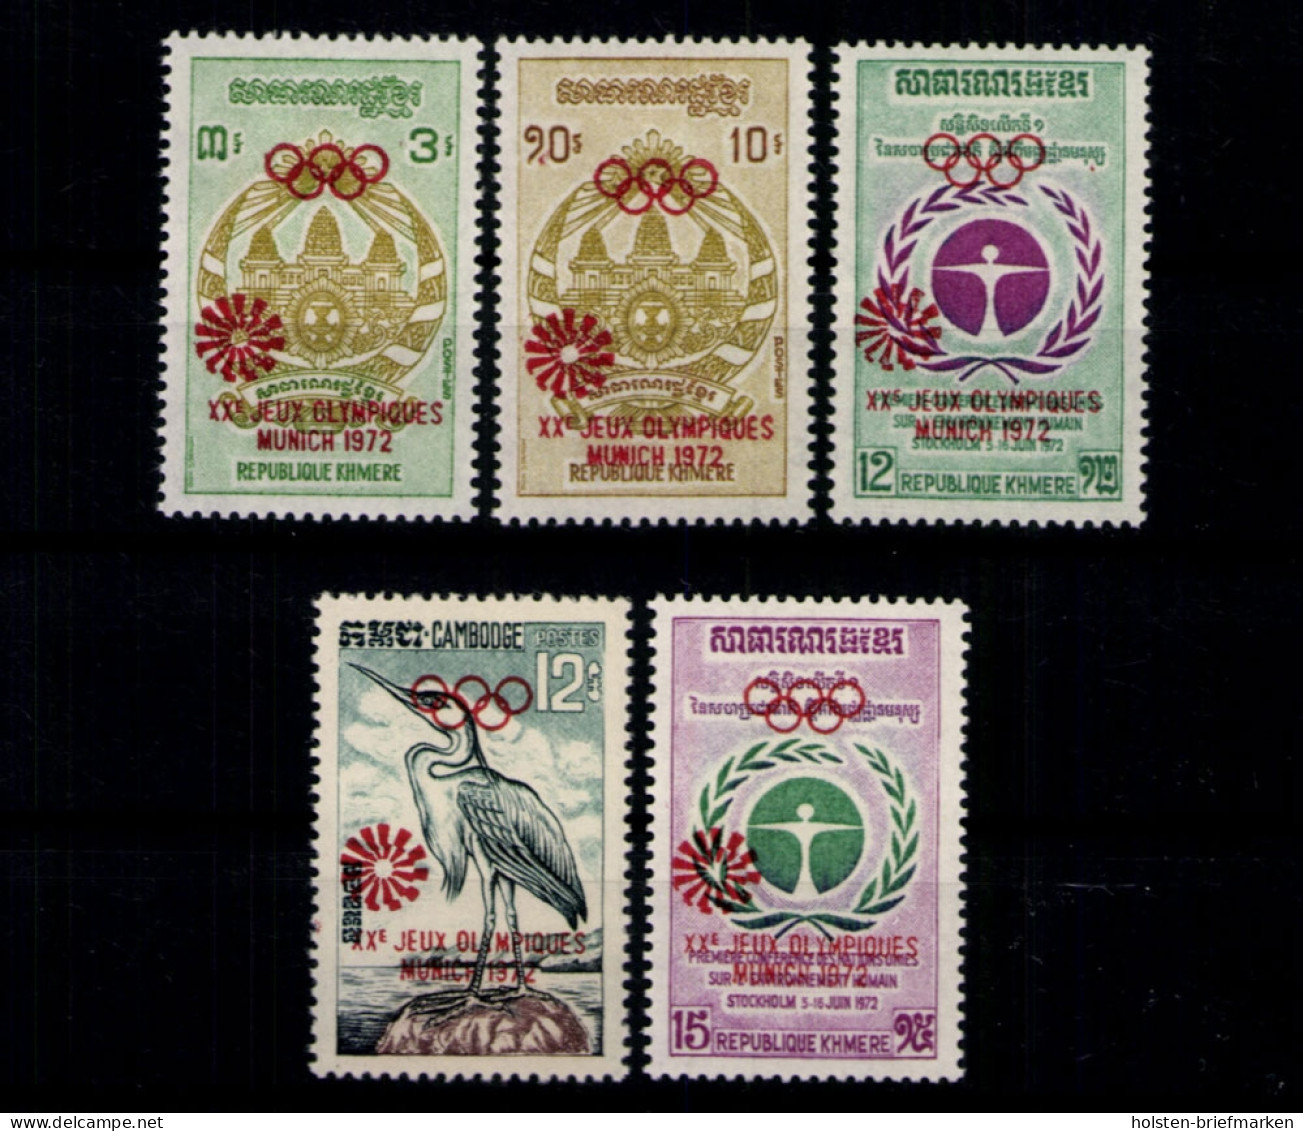 Kambodscha, Olympiade, MiNr. 344-348, Postfrisch - Kambodscha